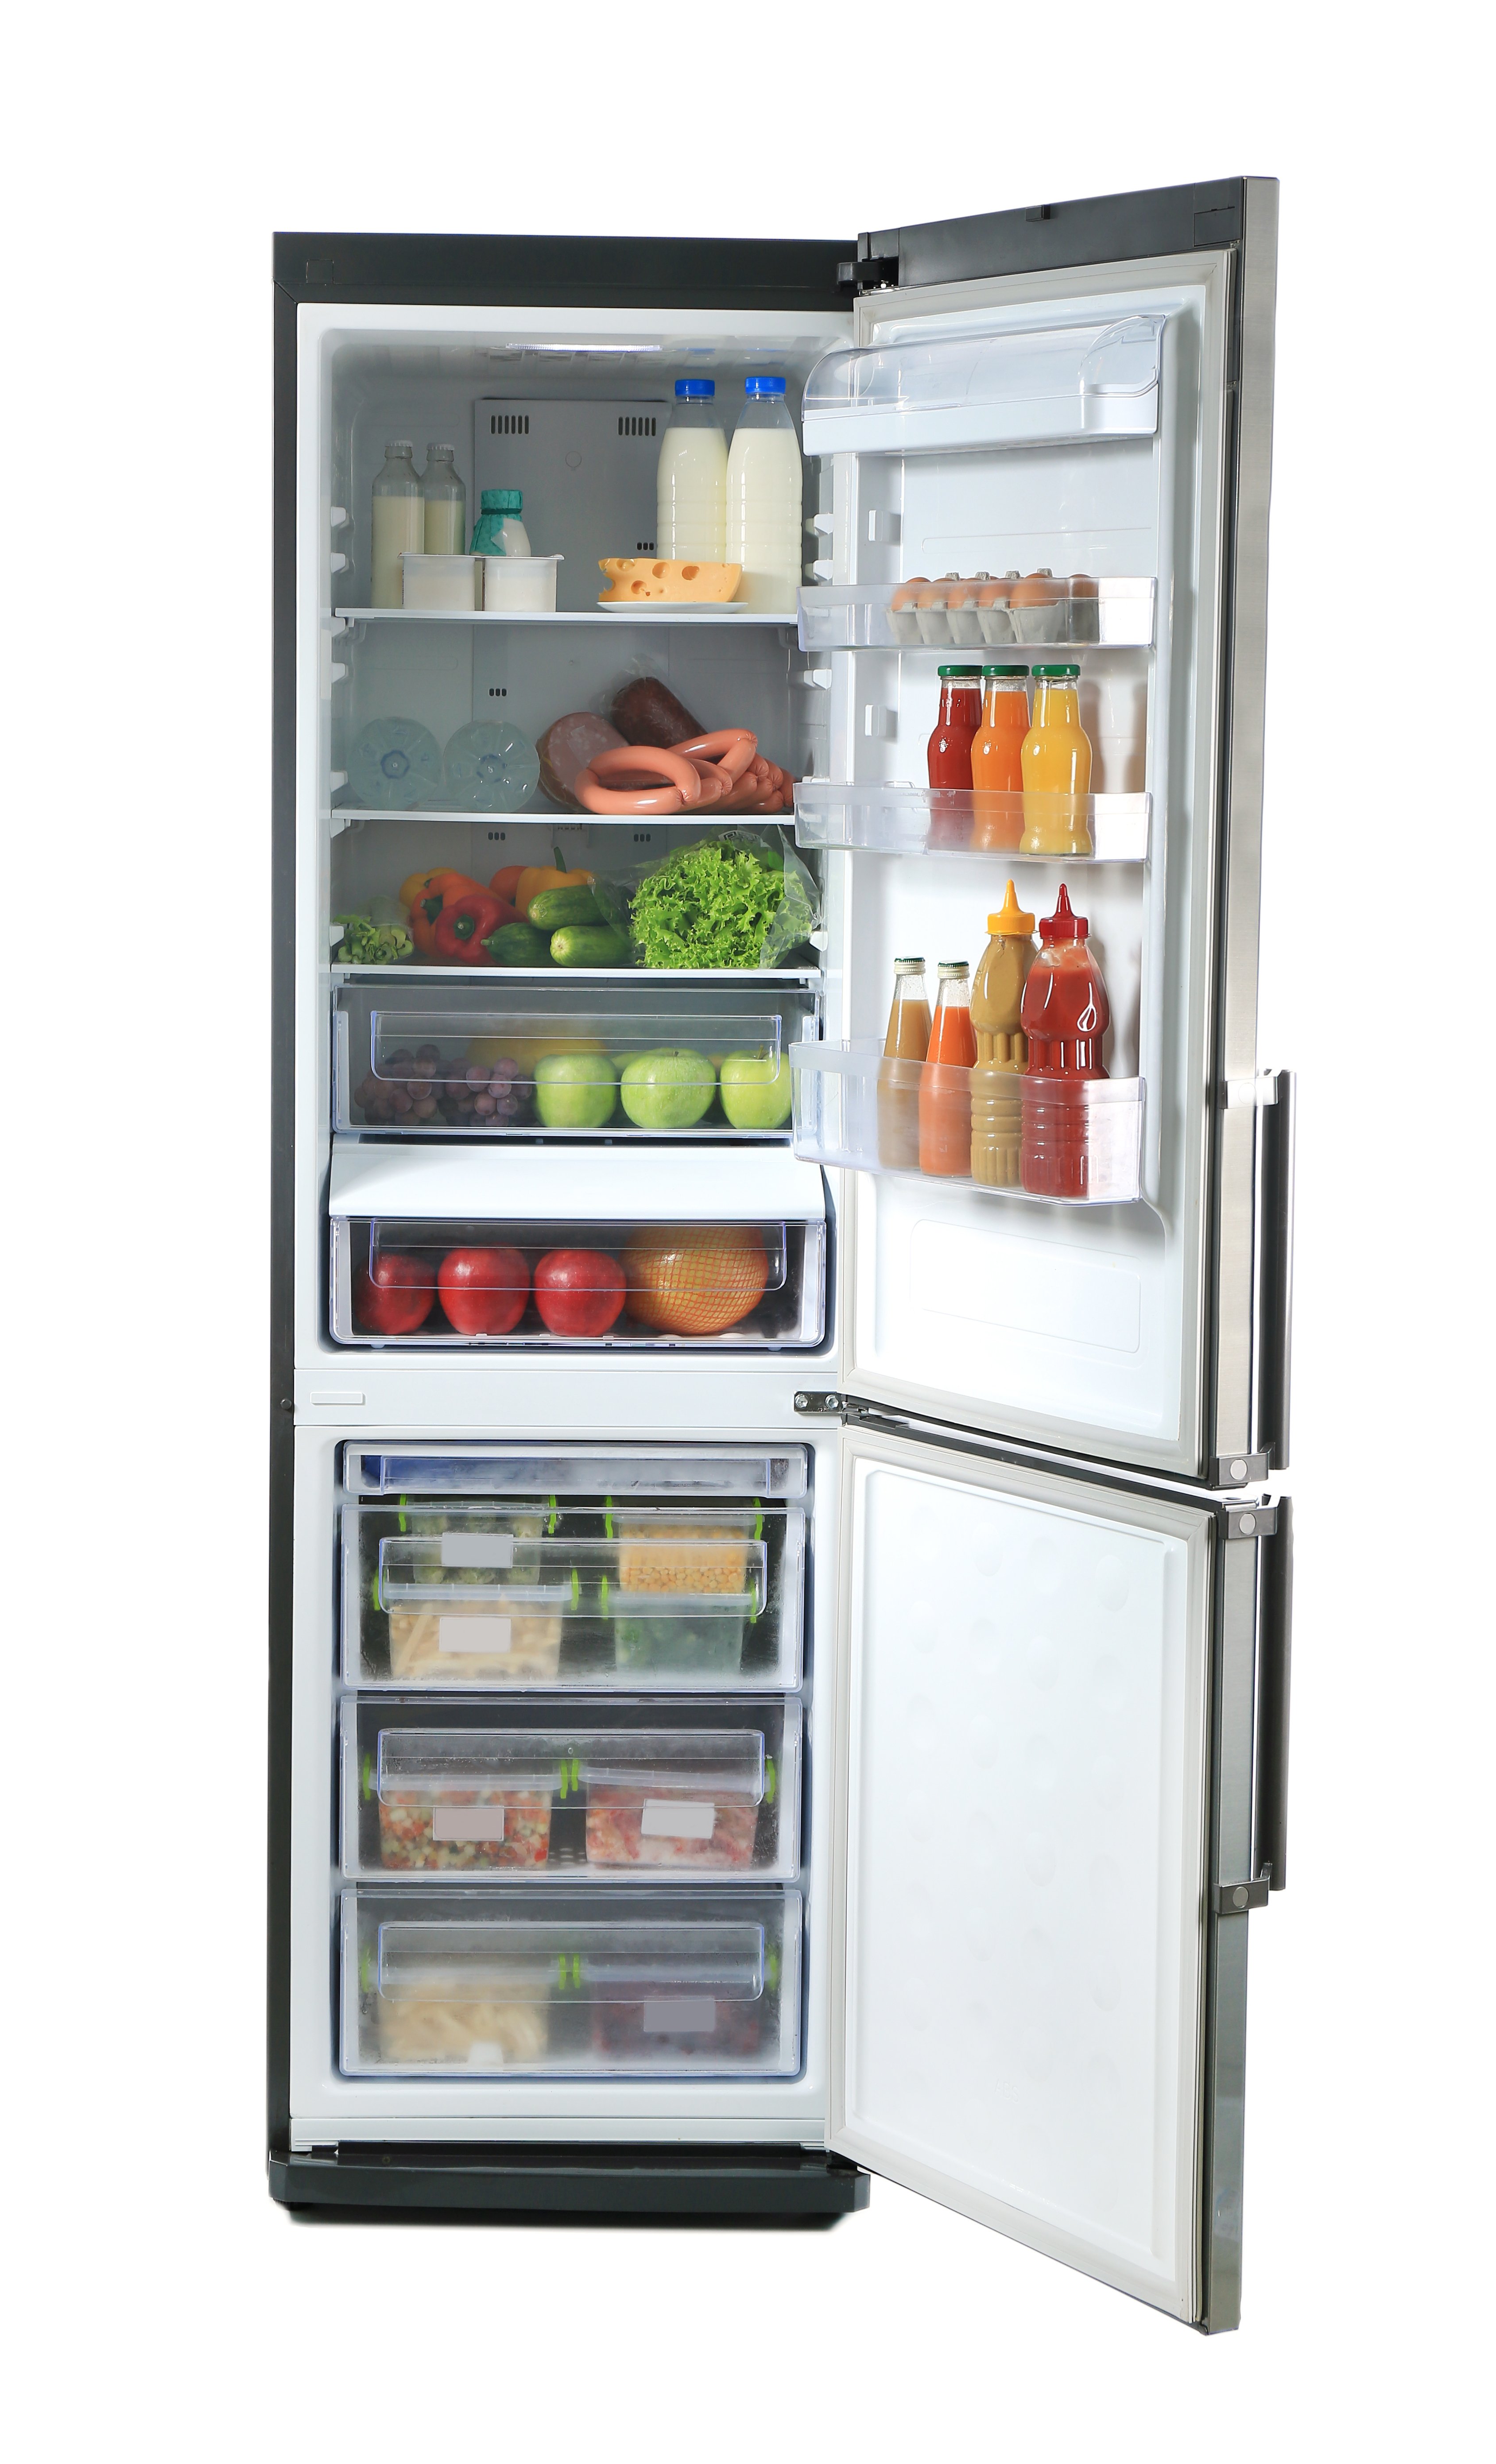 Organized refrigerator | Shutterstock